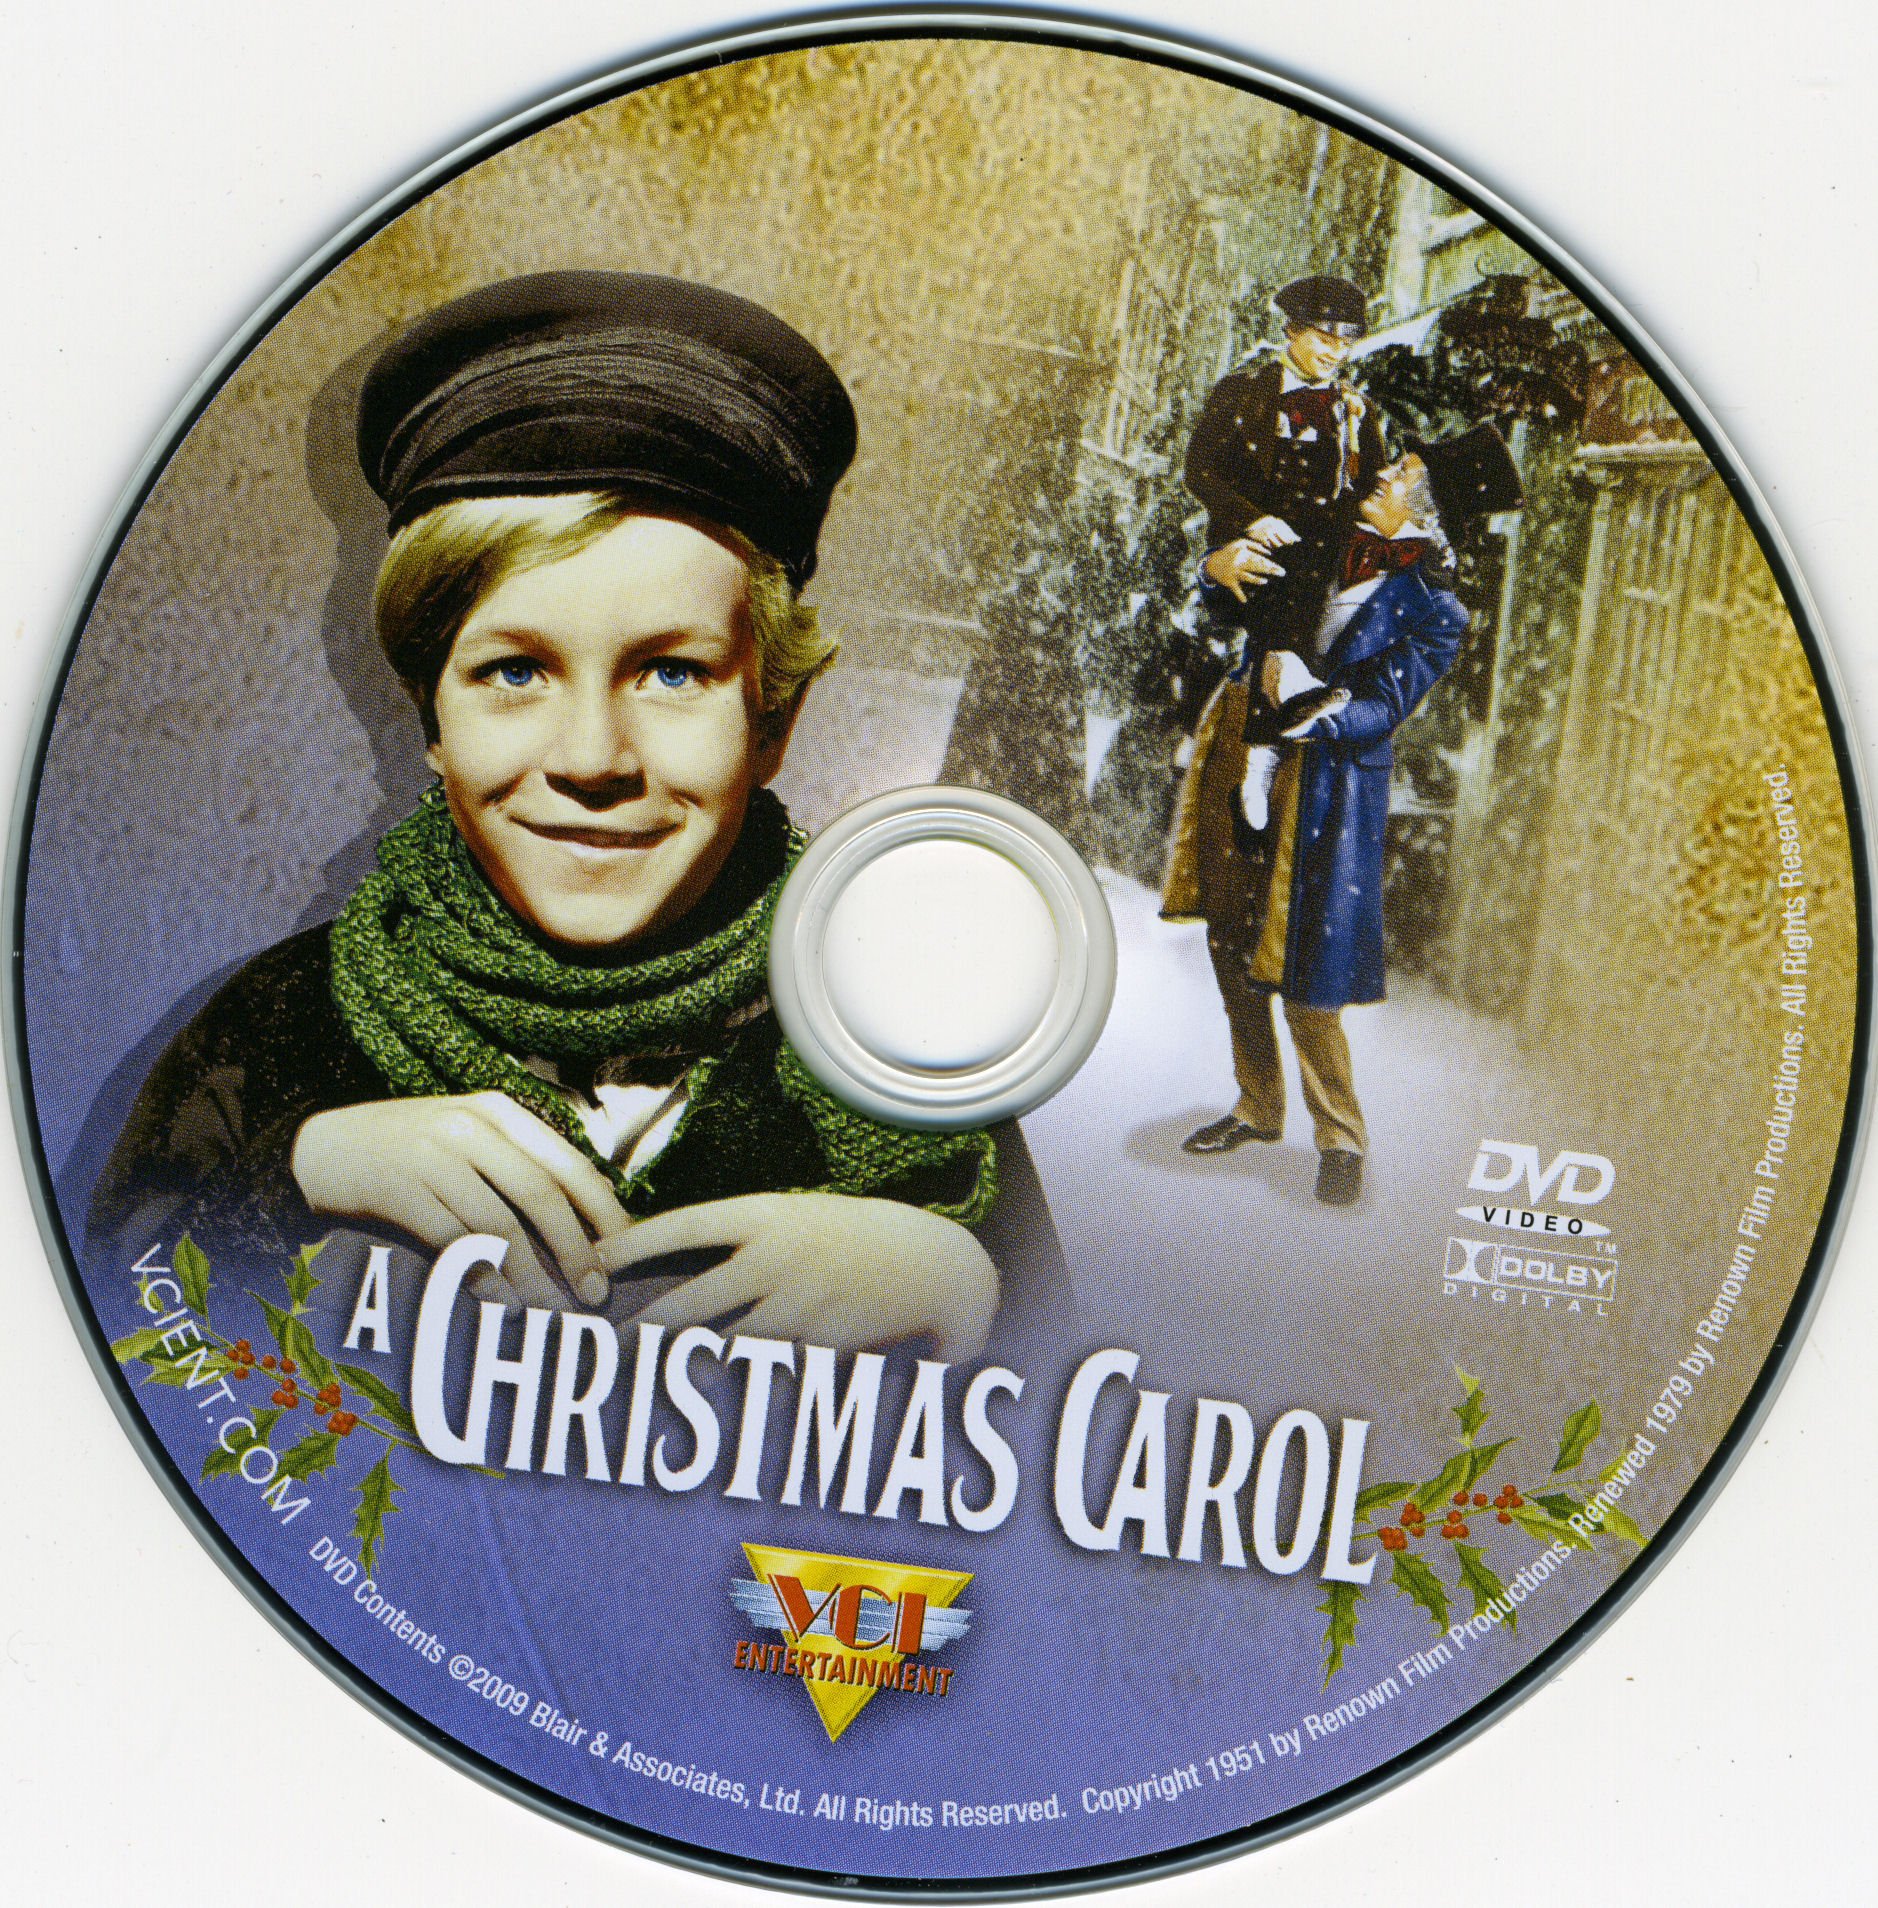 A Christmas Carol 1951 R1 DVD Cover Label.jpg.